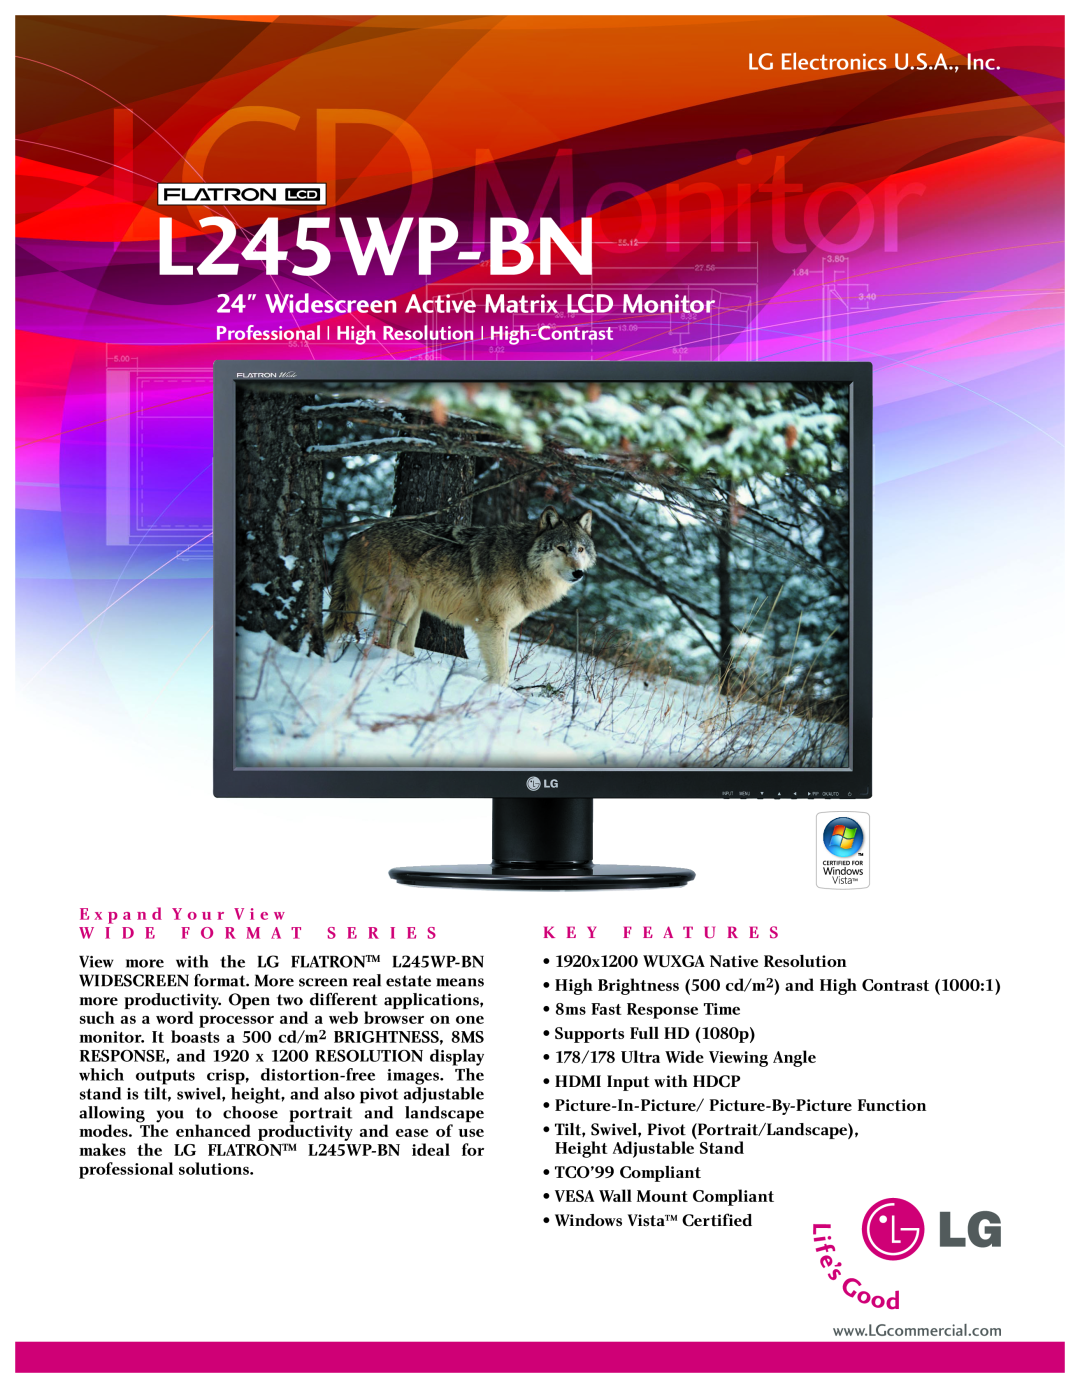 LG Electronics L245WP-BN manual Widescreen Active Matrix LCD Monitor, LG Electronics U.S.A., Inc, K E Y F E A T U R E S 